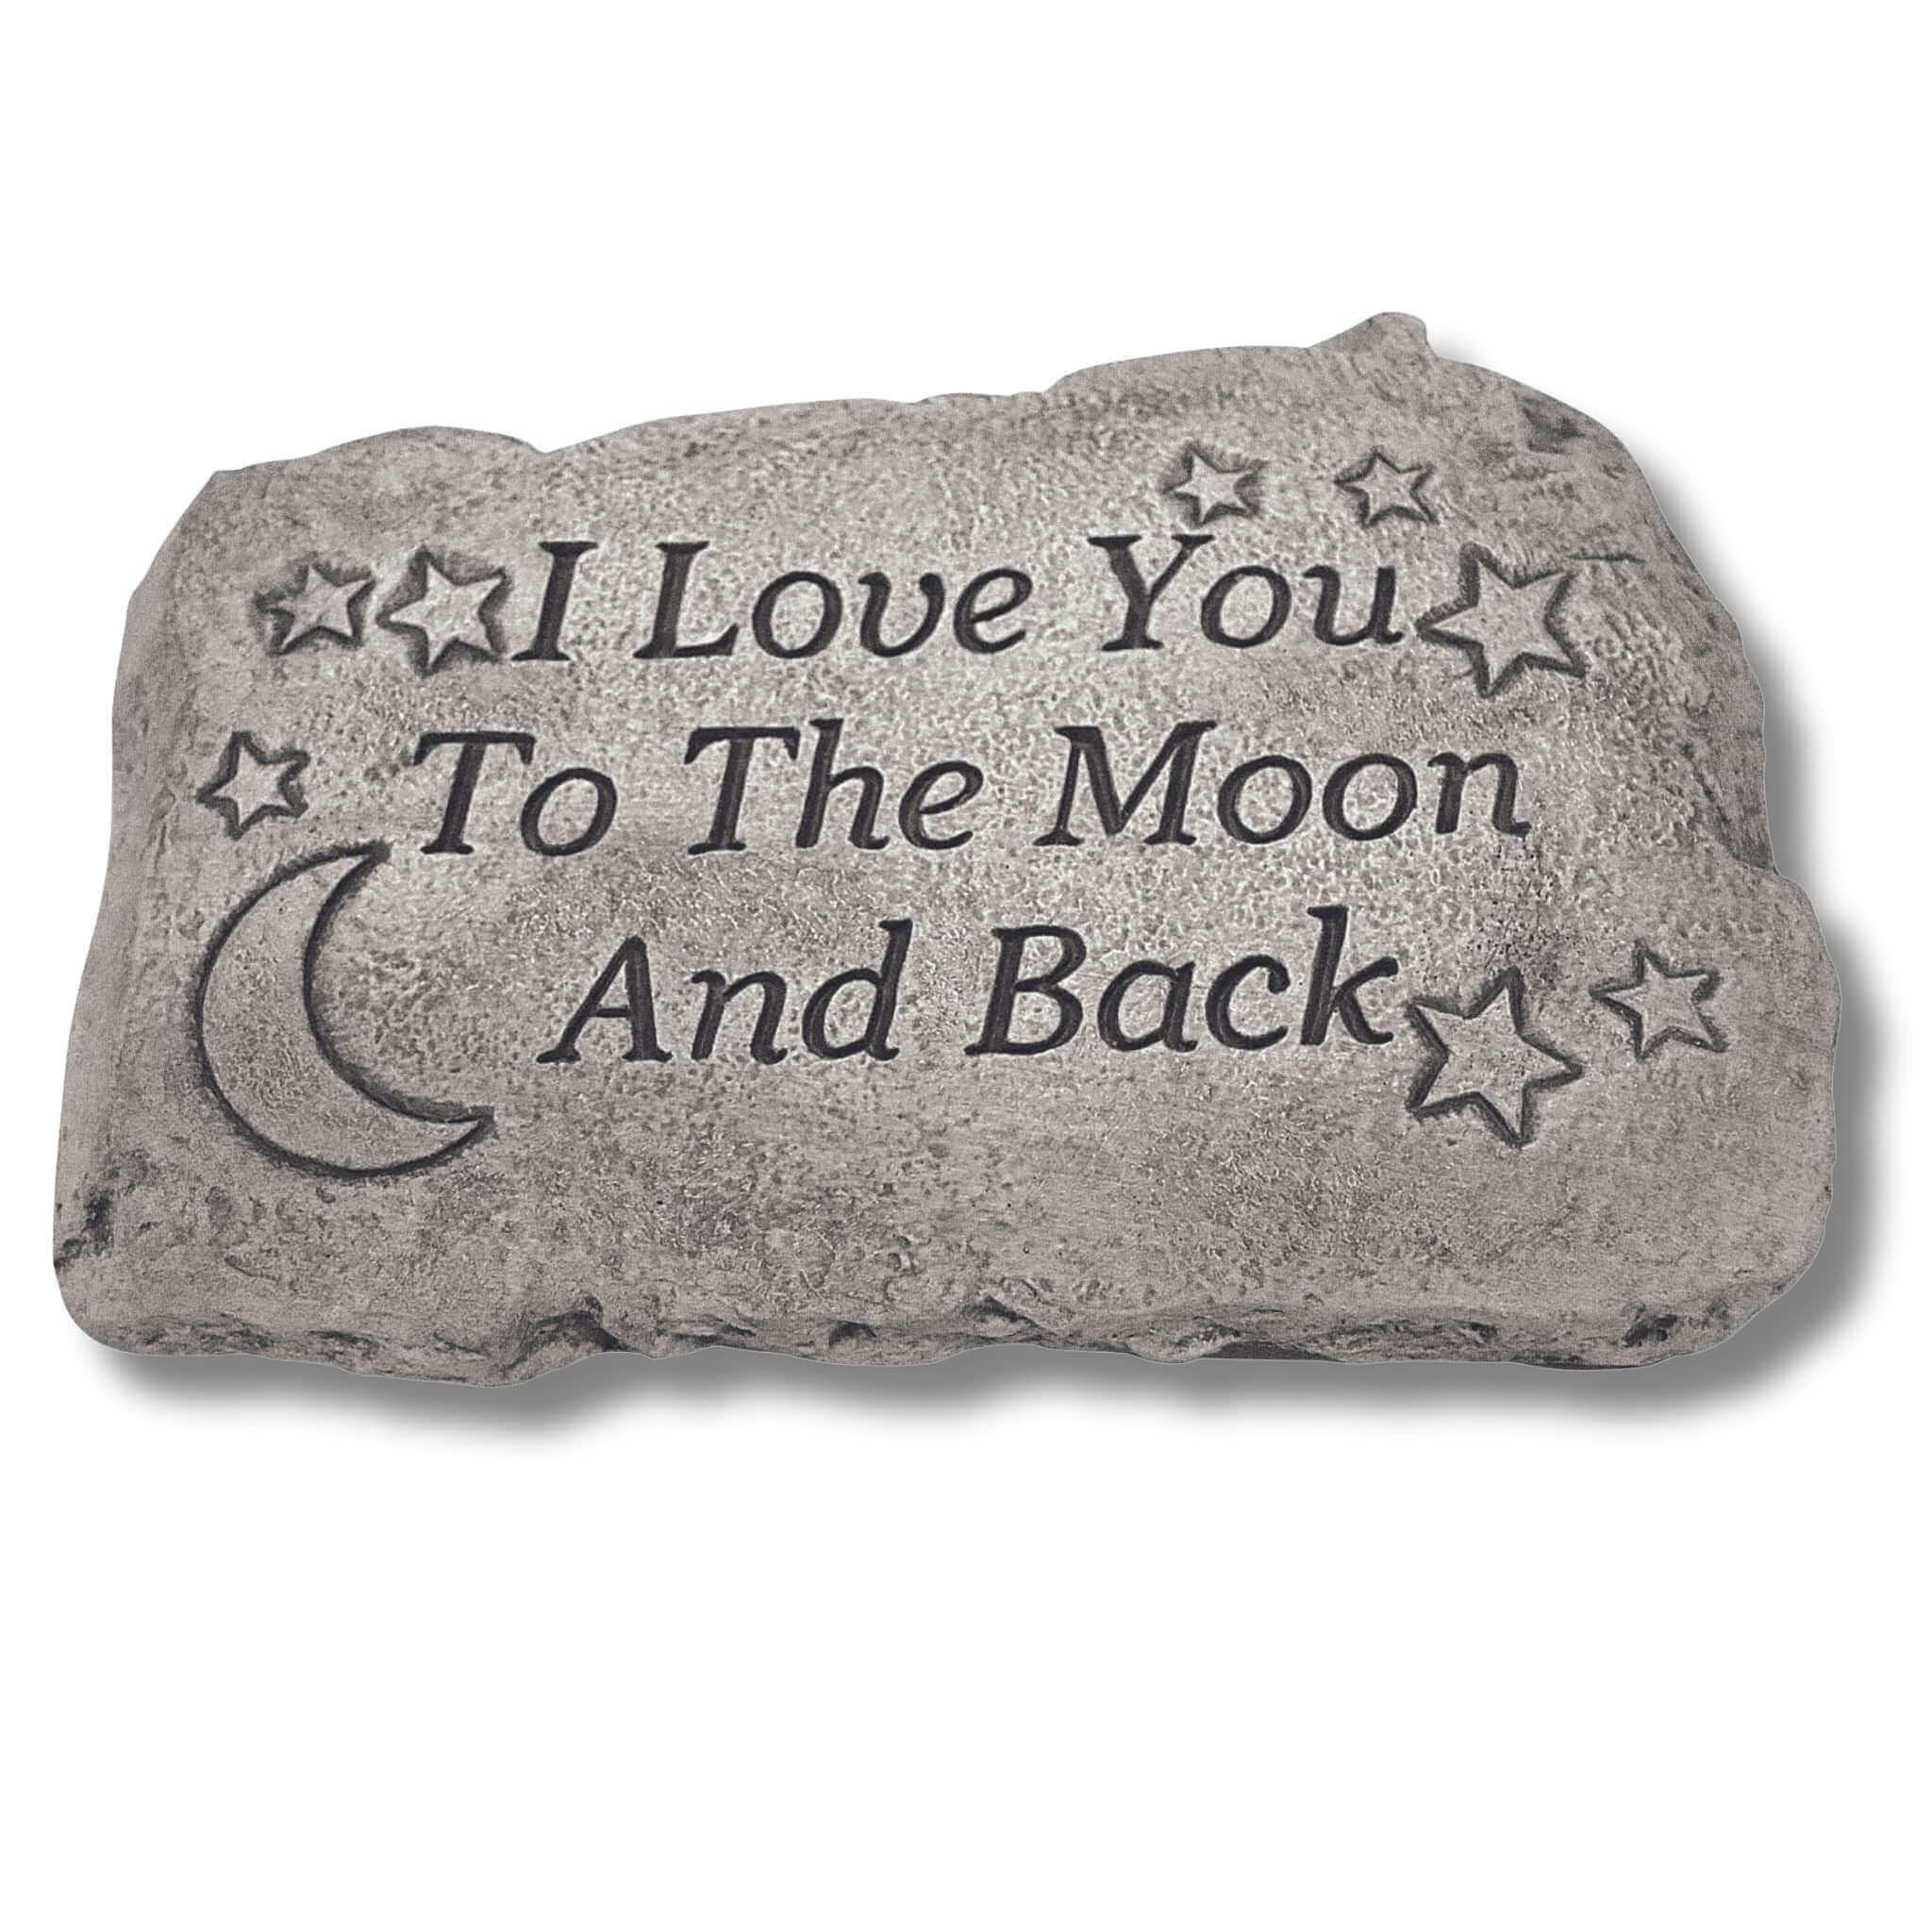 To the Moon and Back Concrete Garden Greeting Stone - Massarellis #1801